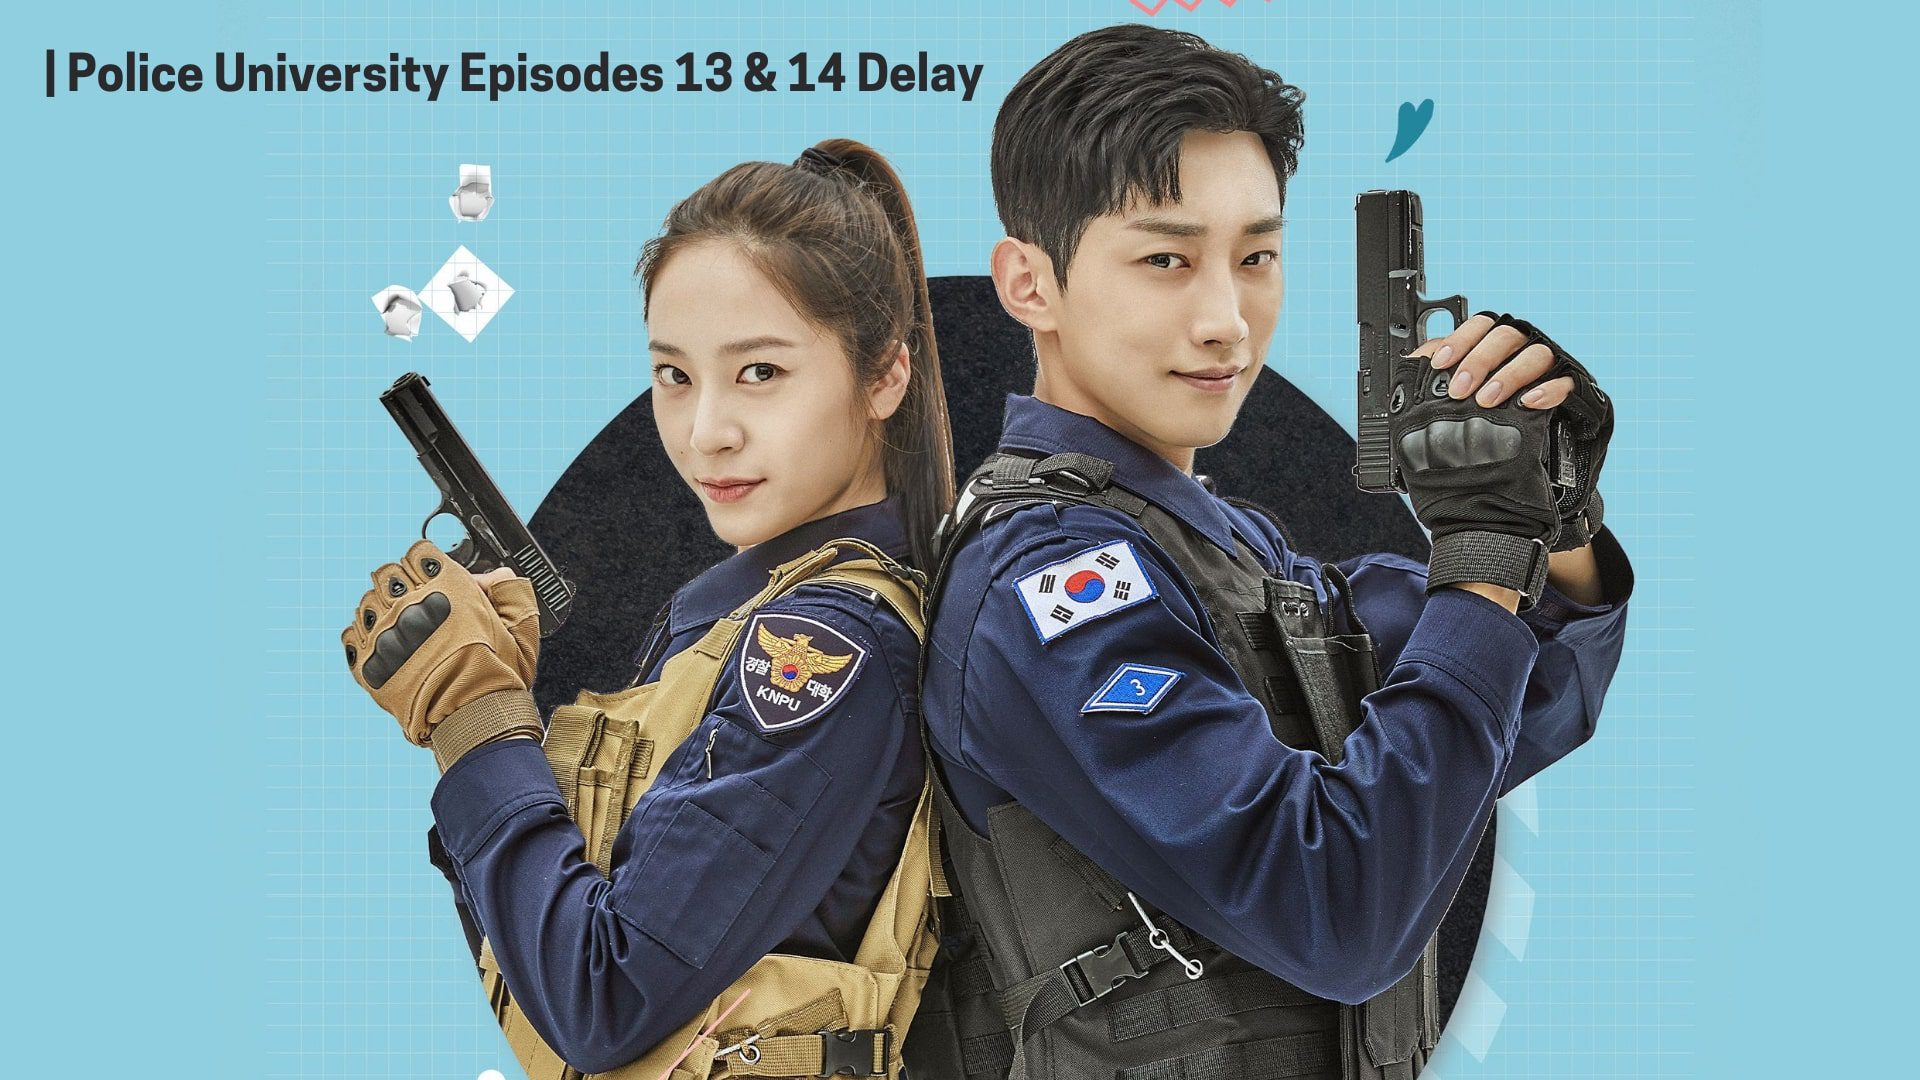 Police University Episodes 13 & 14 Delayed